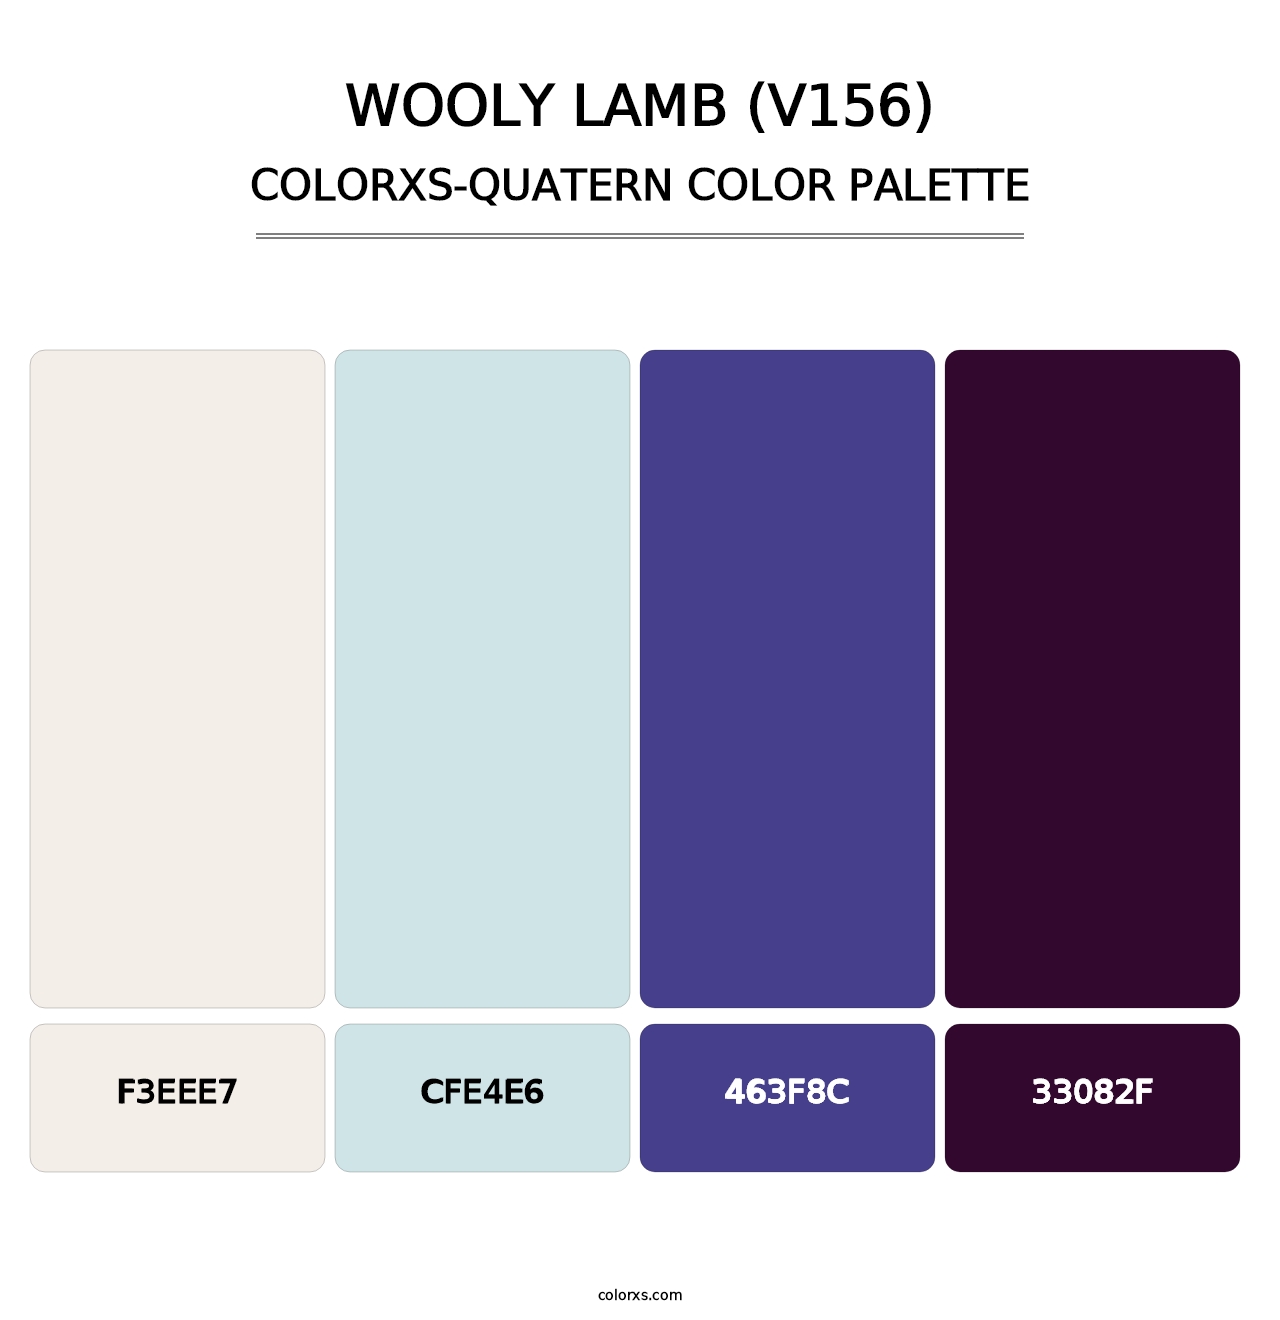 Wooly Lamb (V156) - Colorxs Quatern Palette